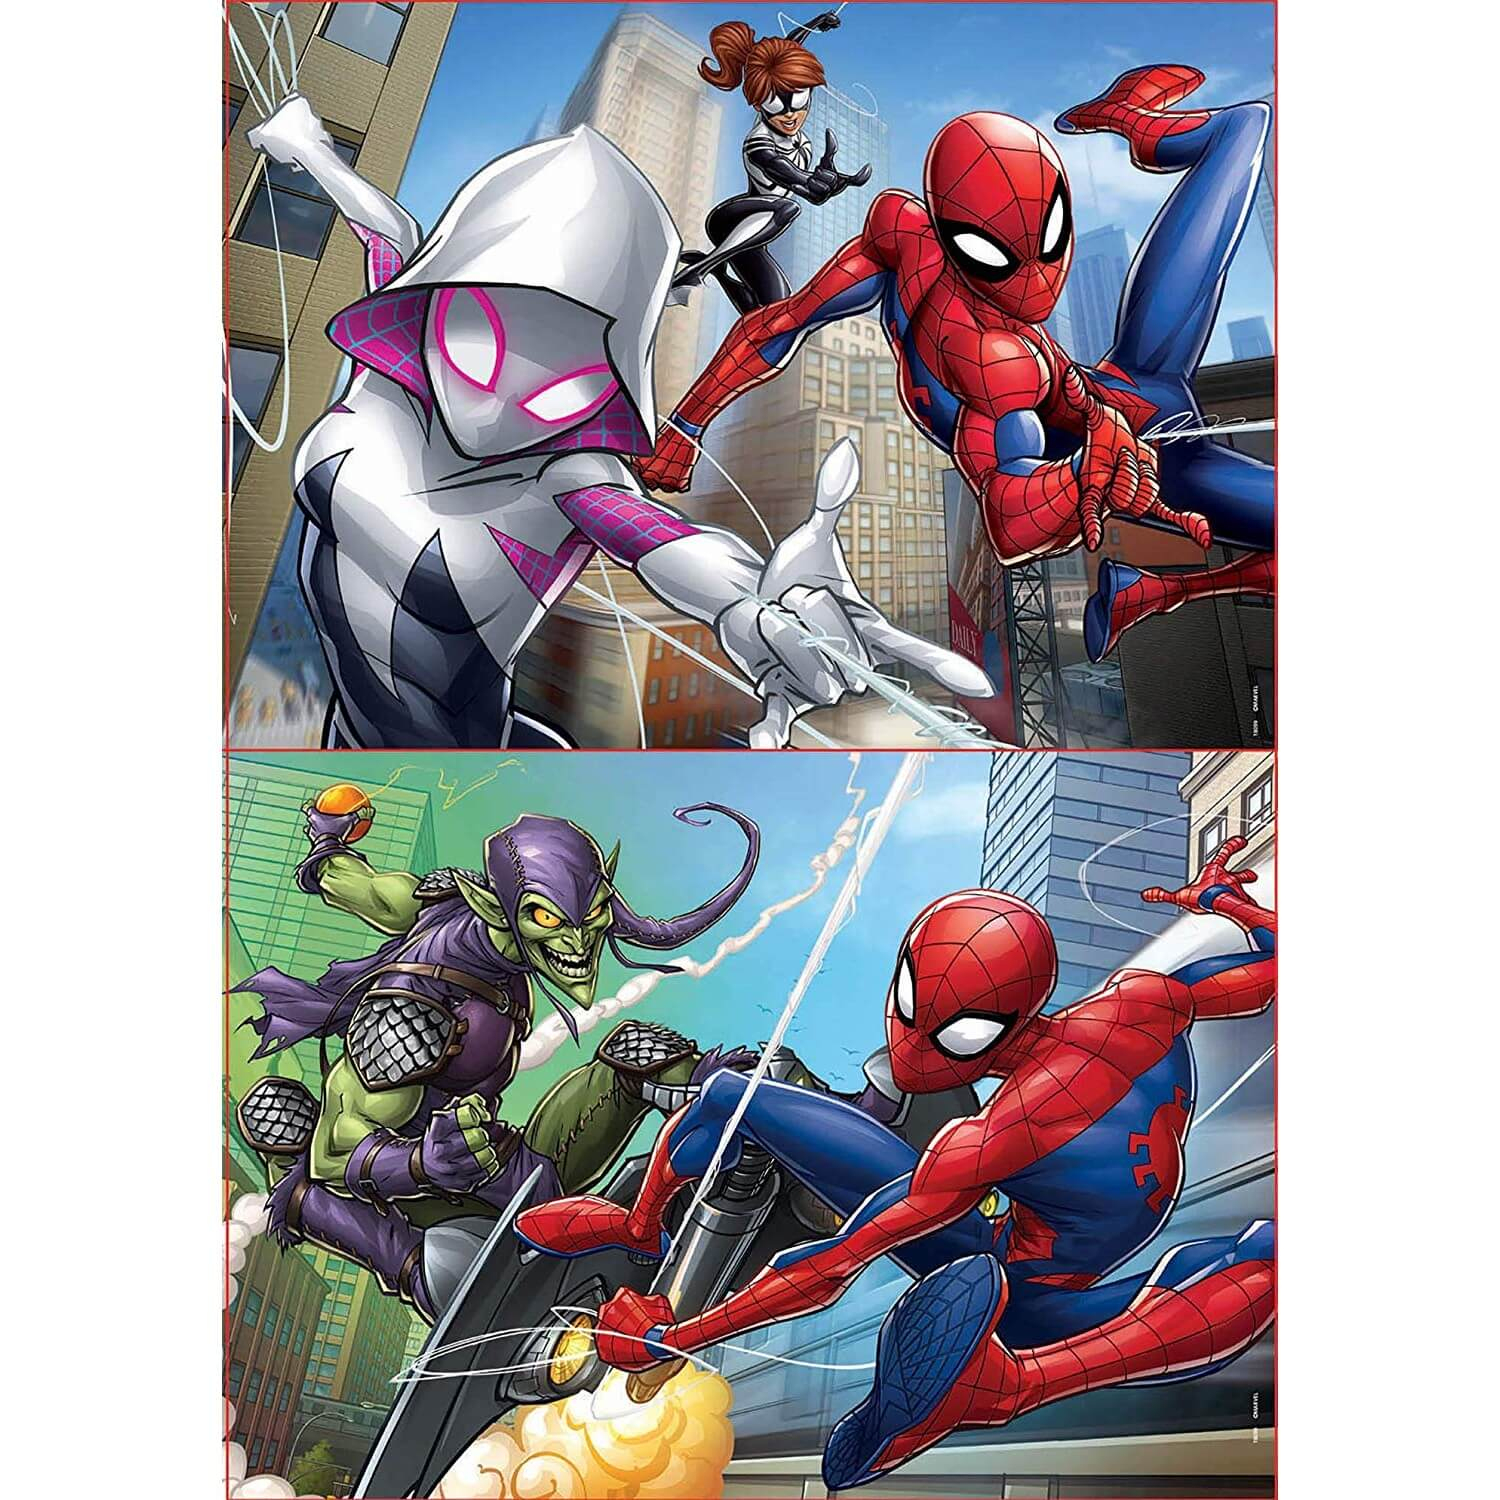 Dessin Manga: Dessin Anime Tracteur Avec Spiderman concernant Spiderman Dessin Animé